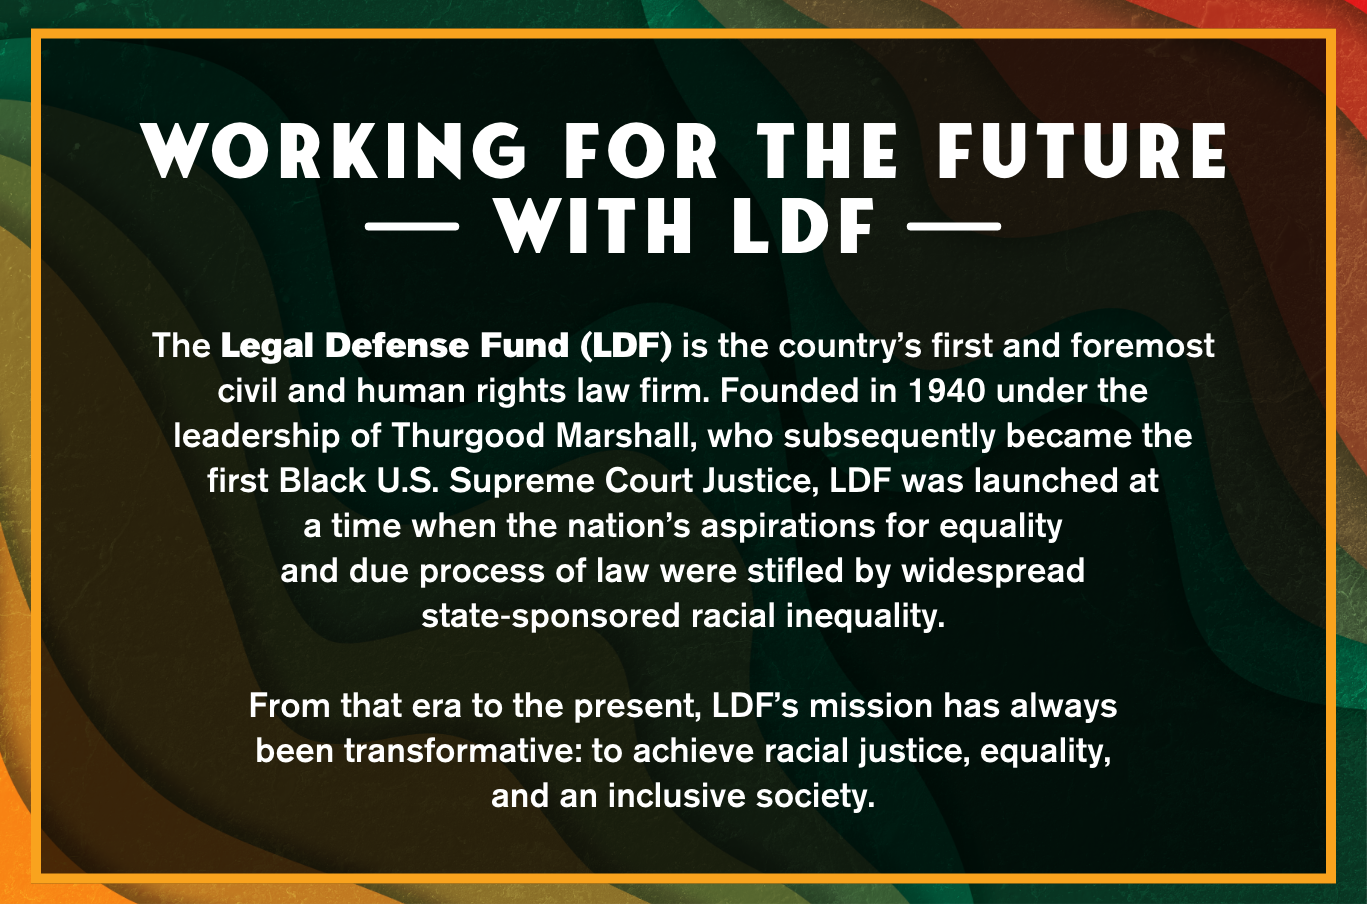 Legal Defense Fund